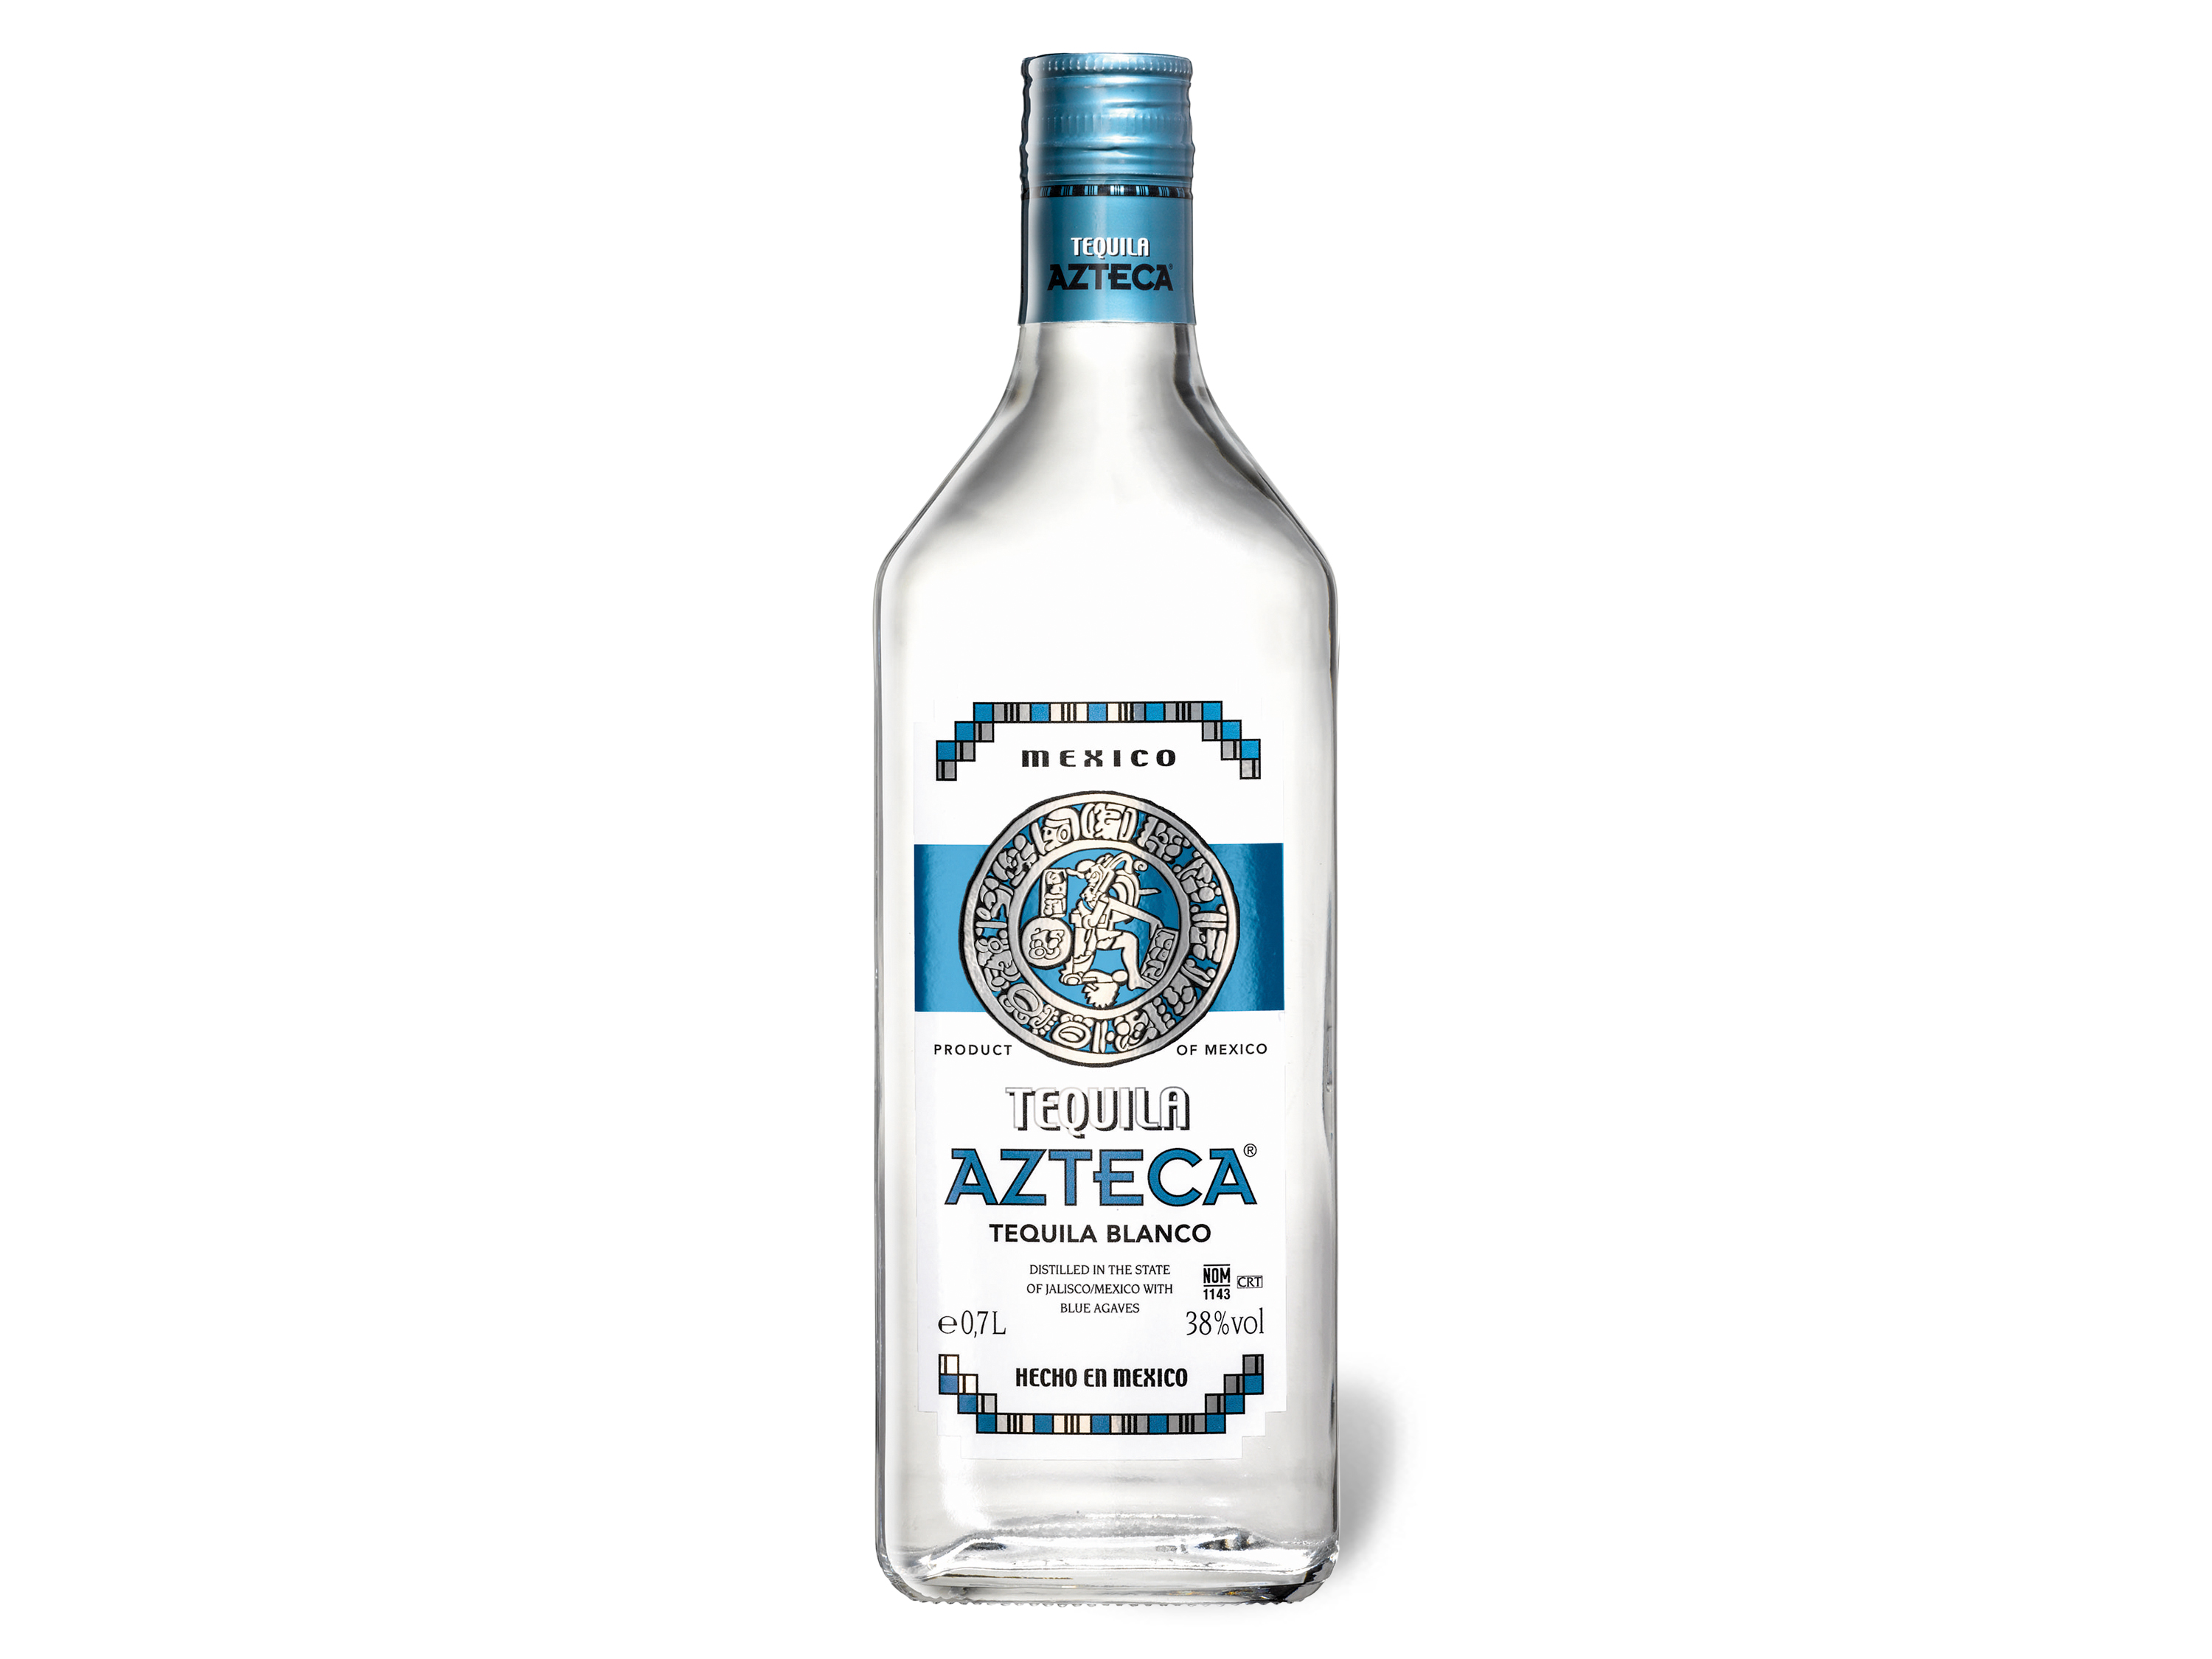 Angebot Lidl Azteca Tequila Blanco 38% Vol Lidl